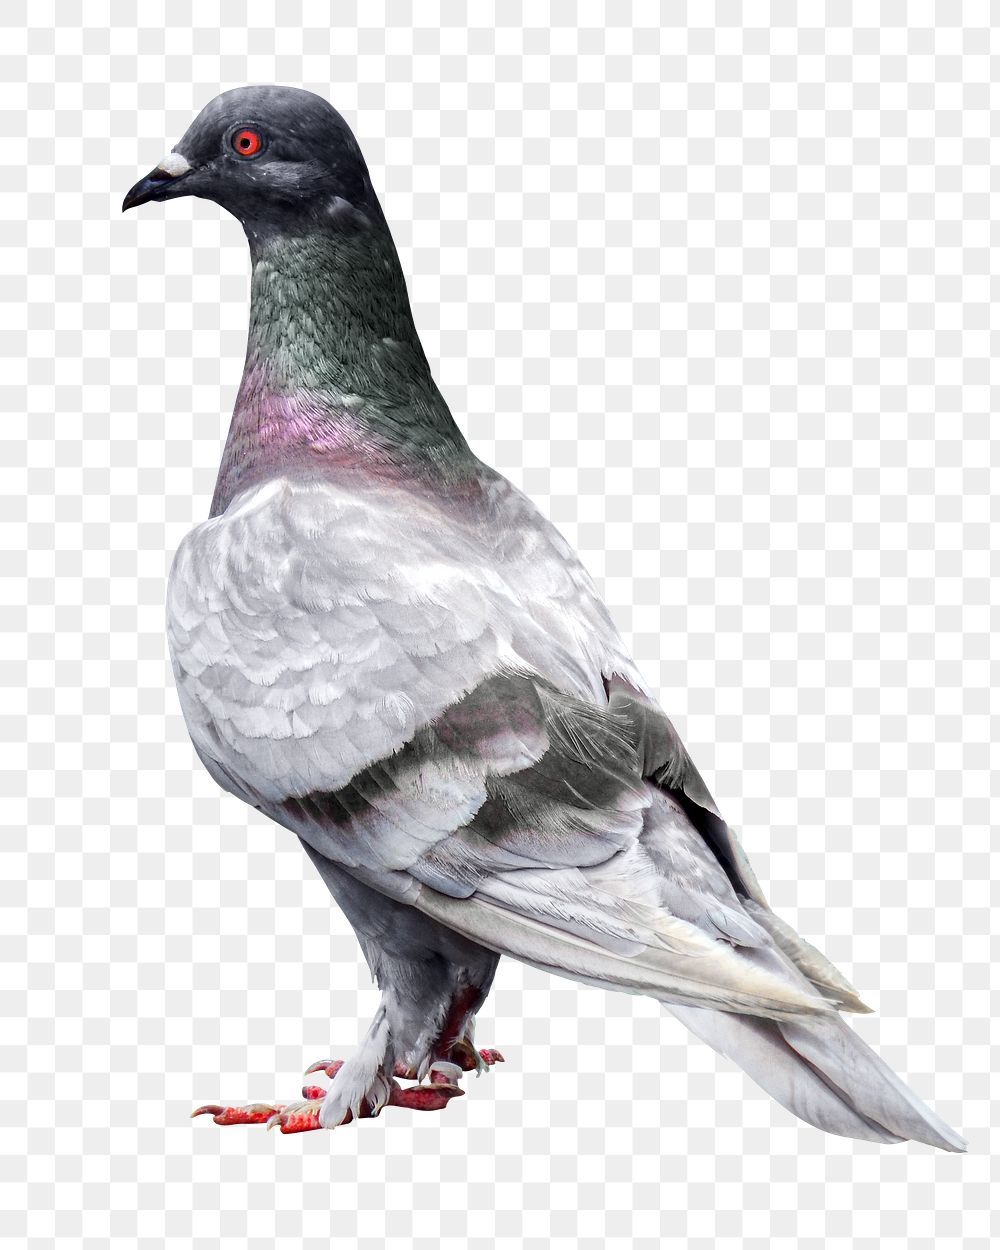 Pigeon bird png sticker, transparent background